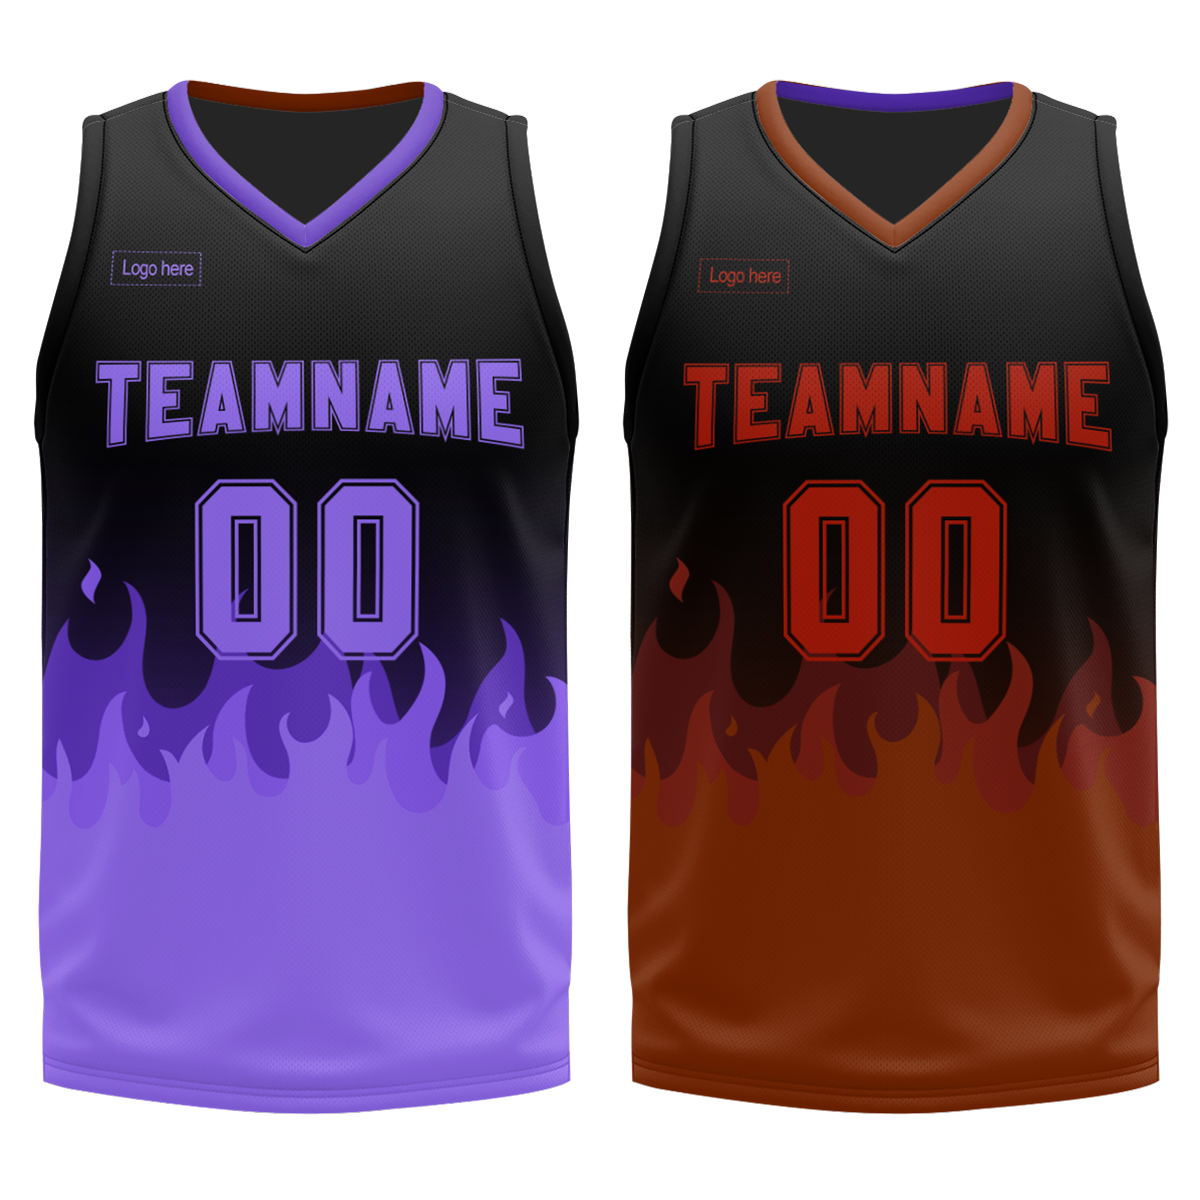 wholesale-custom-sublimation-printing-short-sleeve-sportswear-competitive-reversible-basketball-jersey-at-cj-pod-4